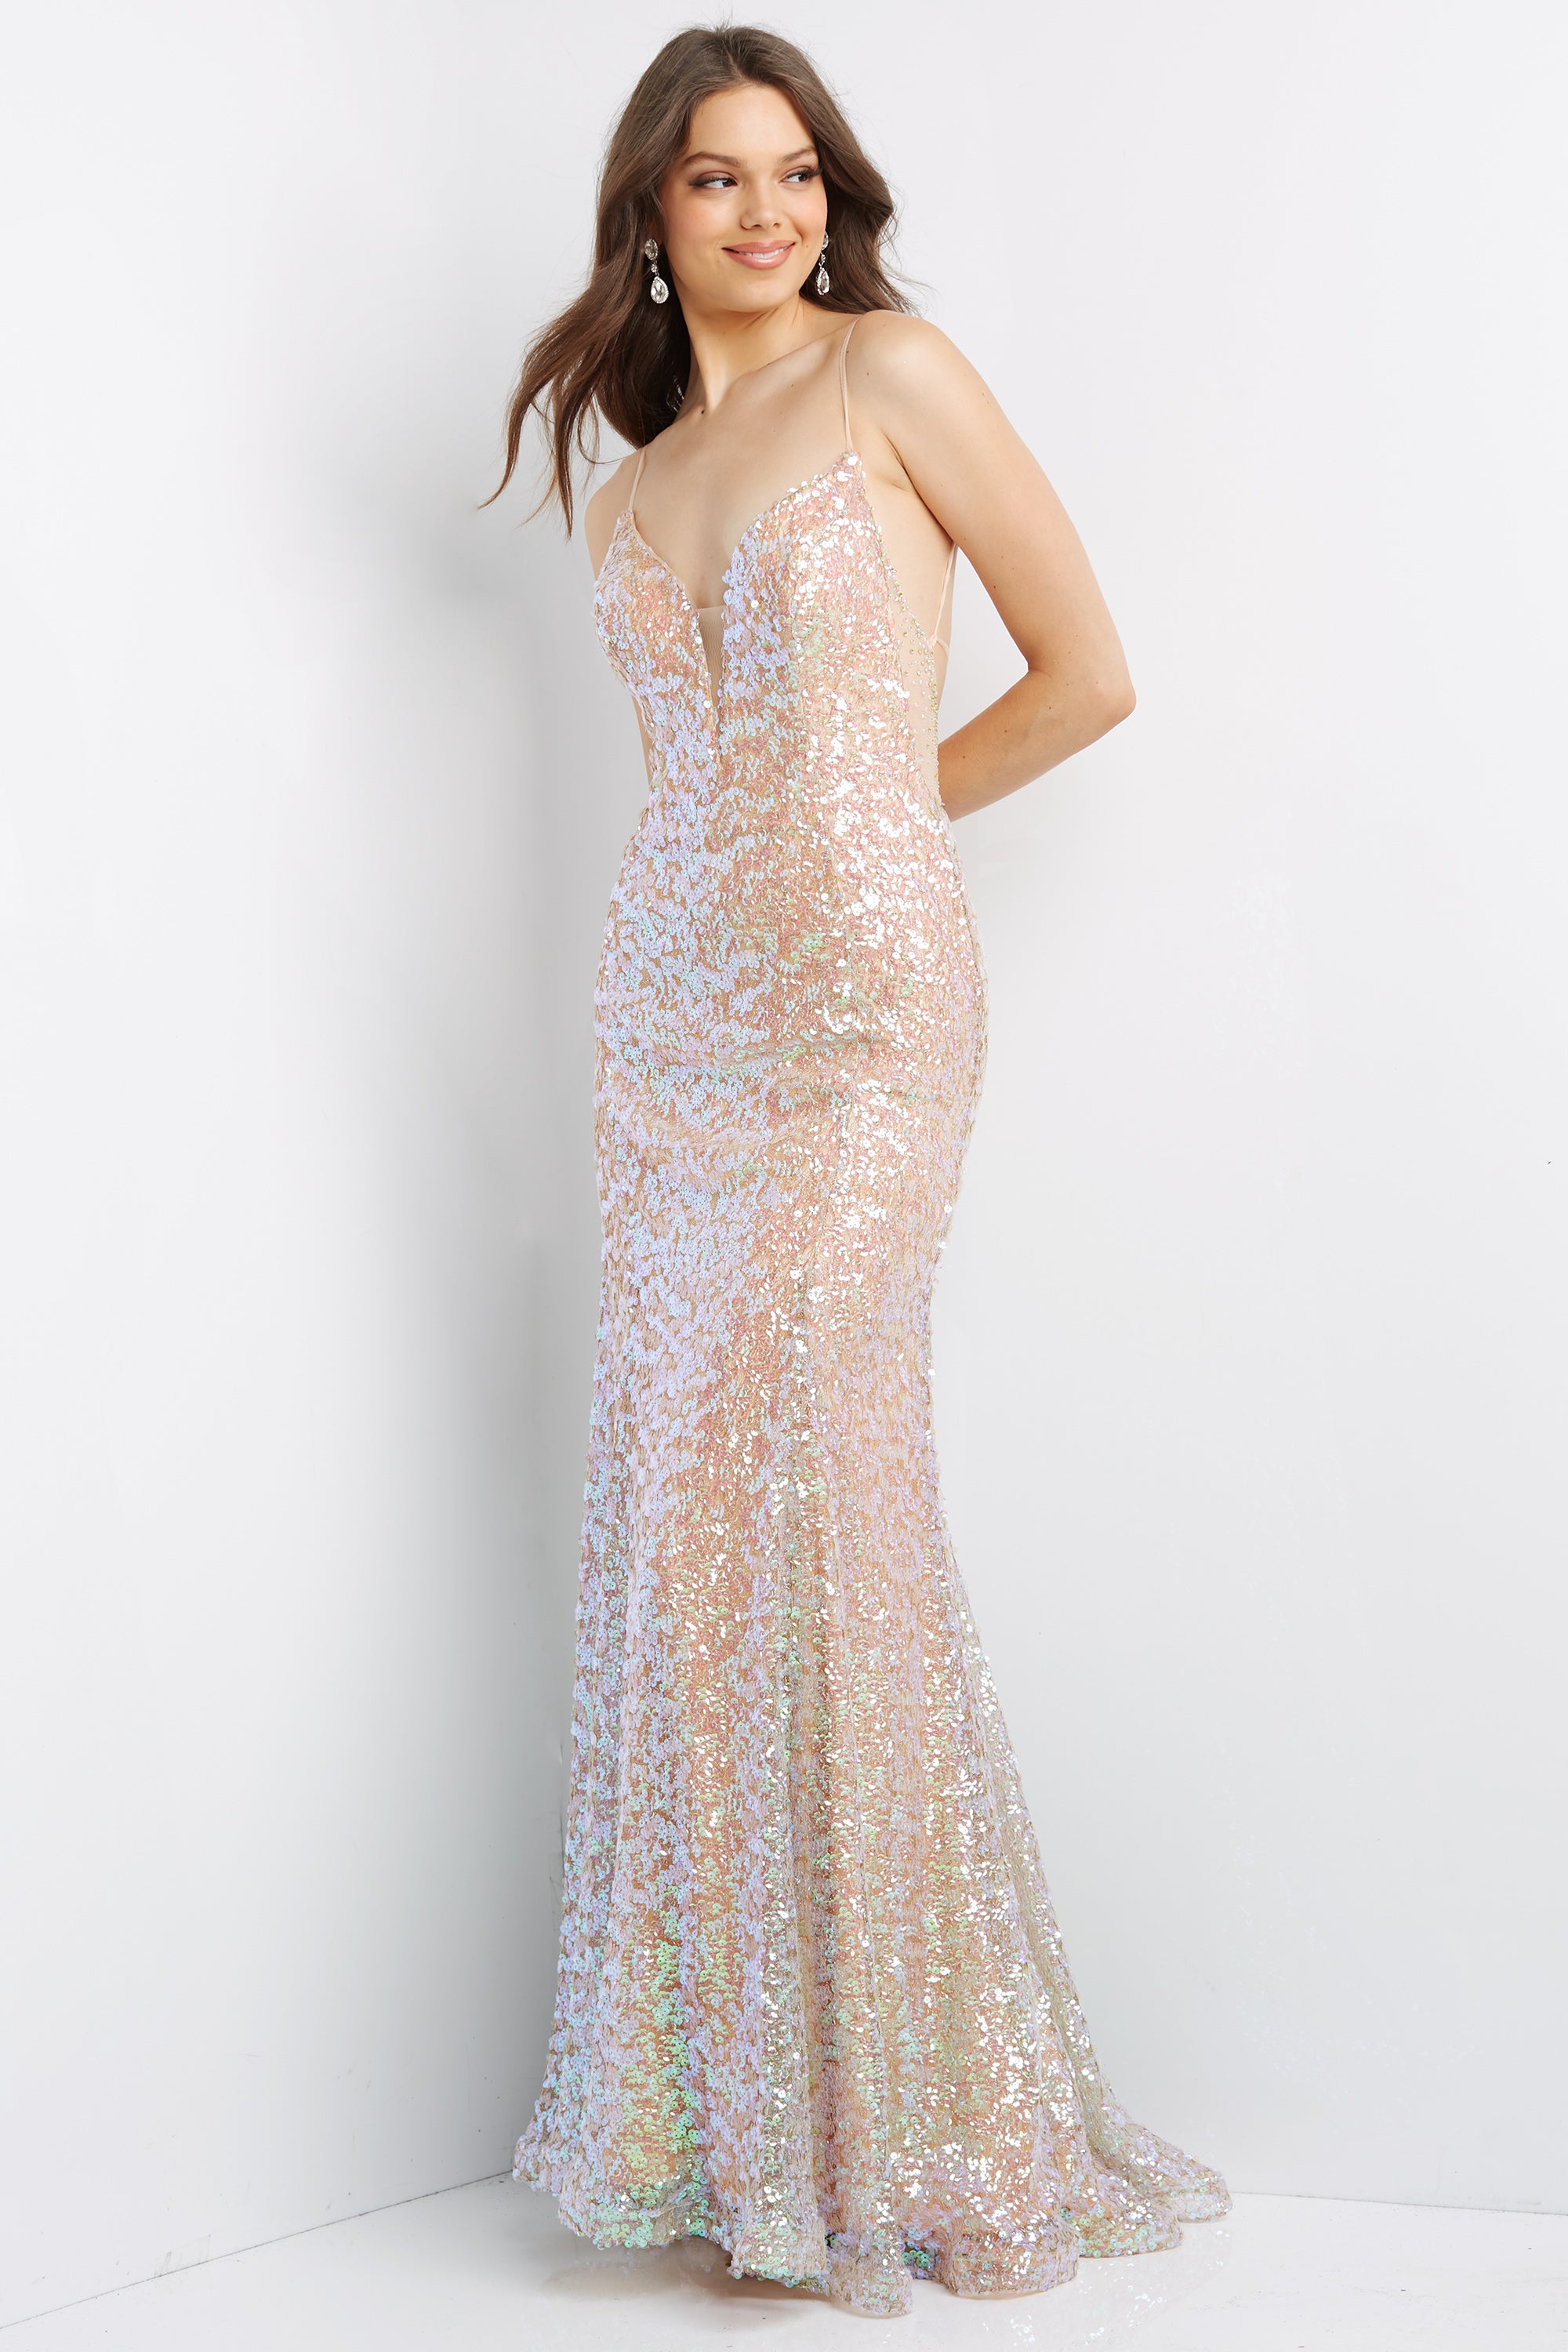 Strapless Regency Satin Prom Dress with Beaded Pockets - VQ